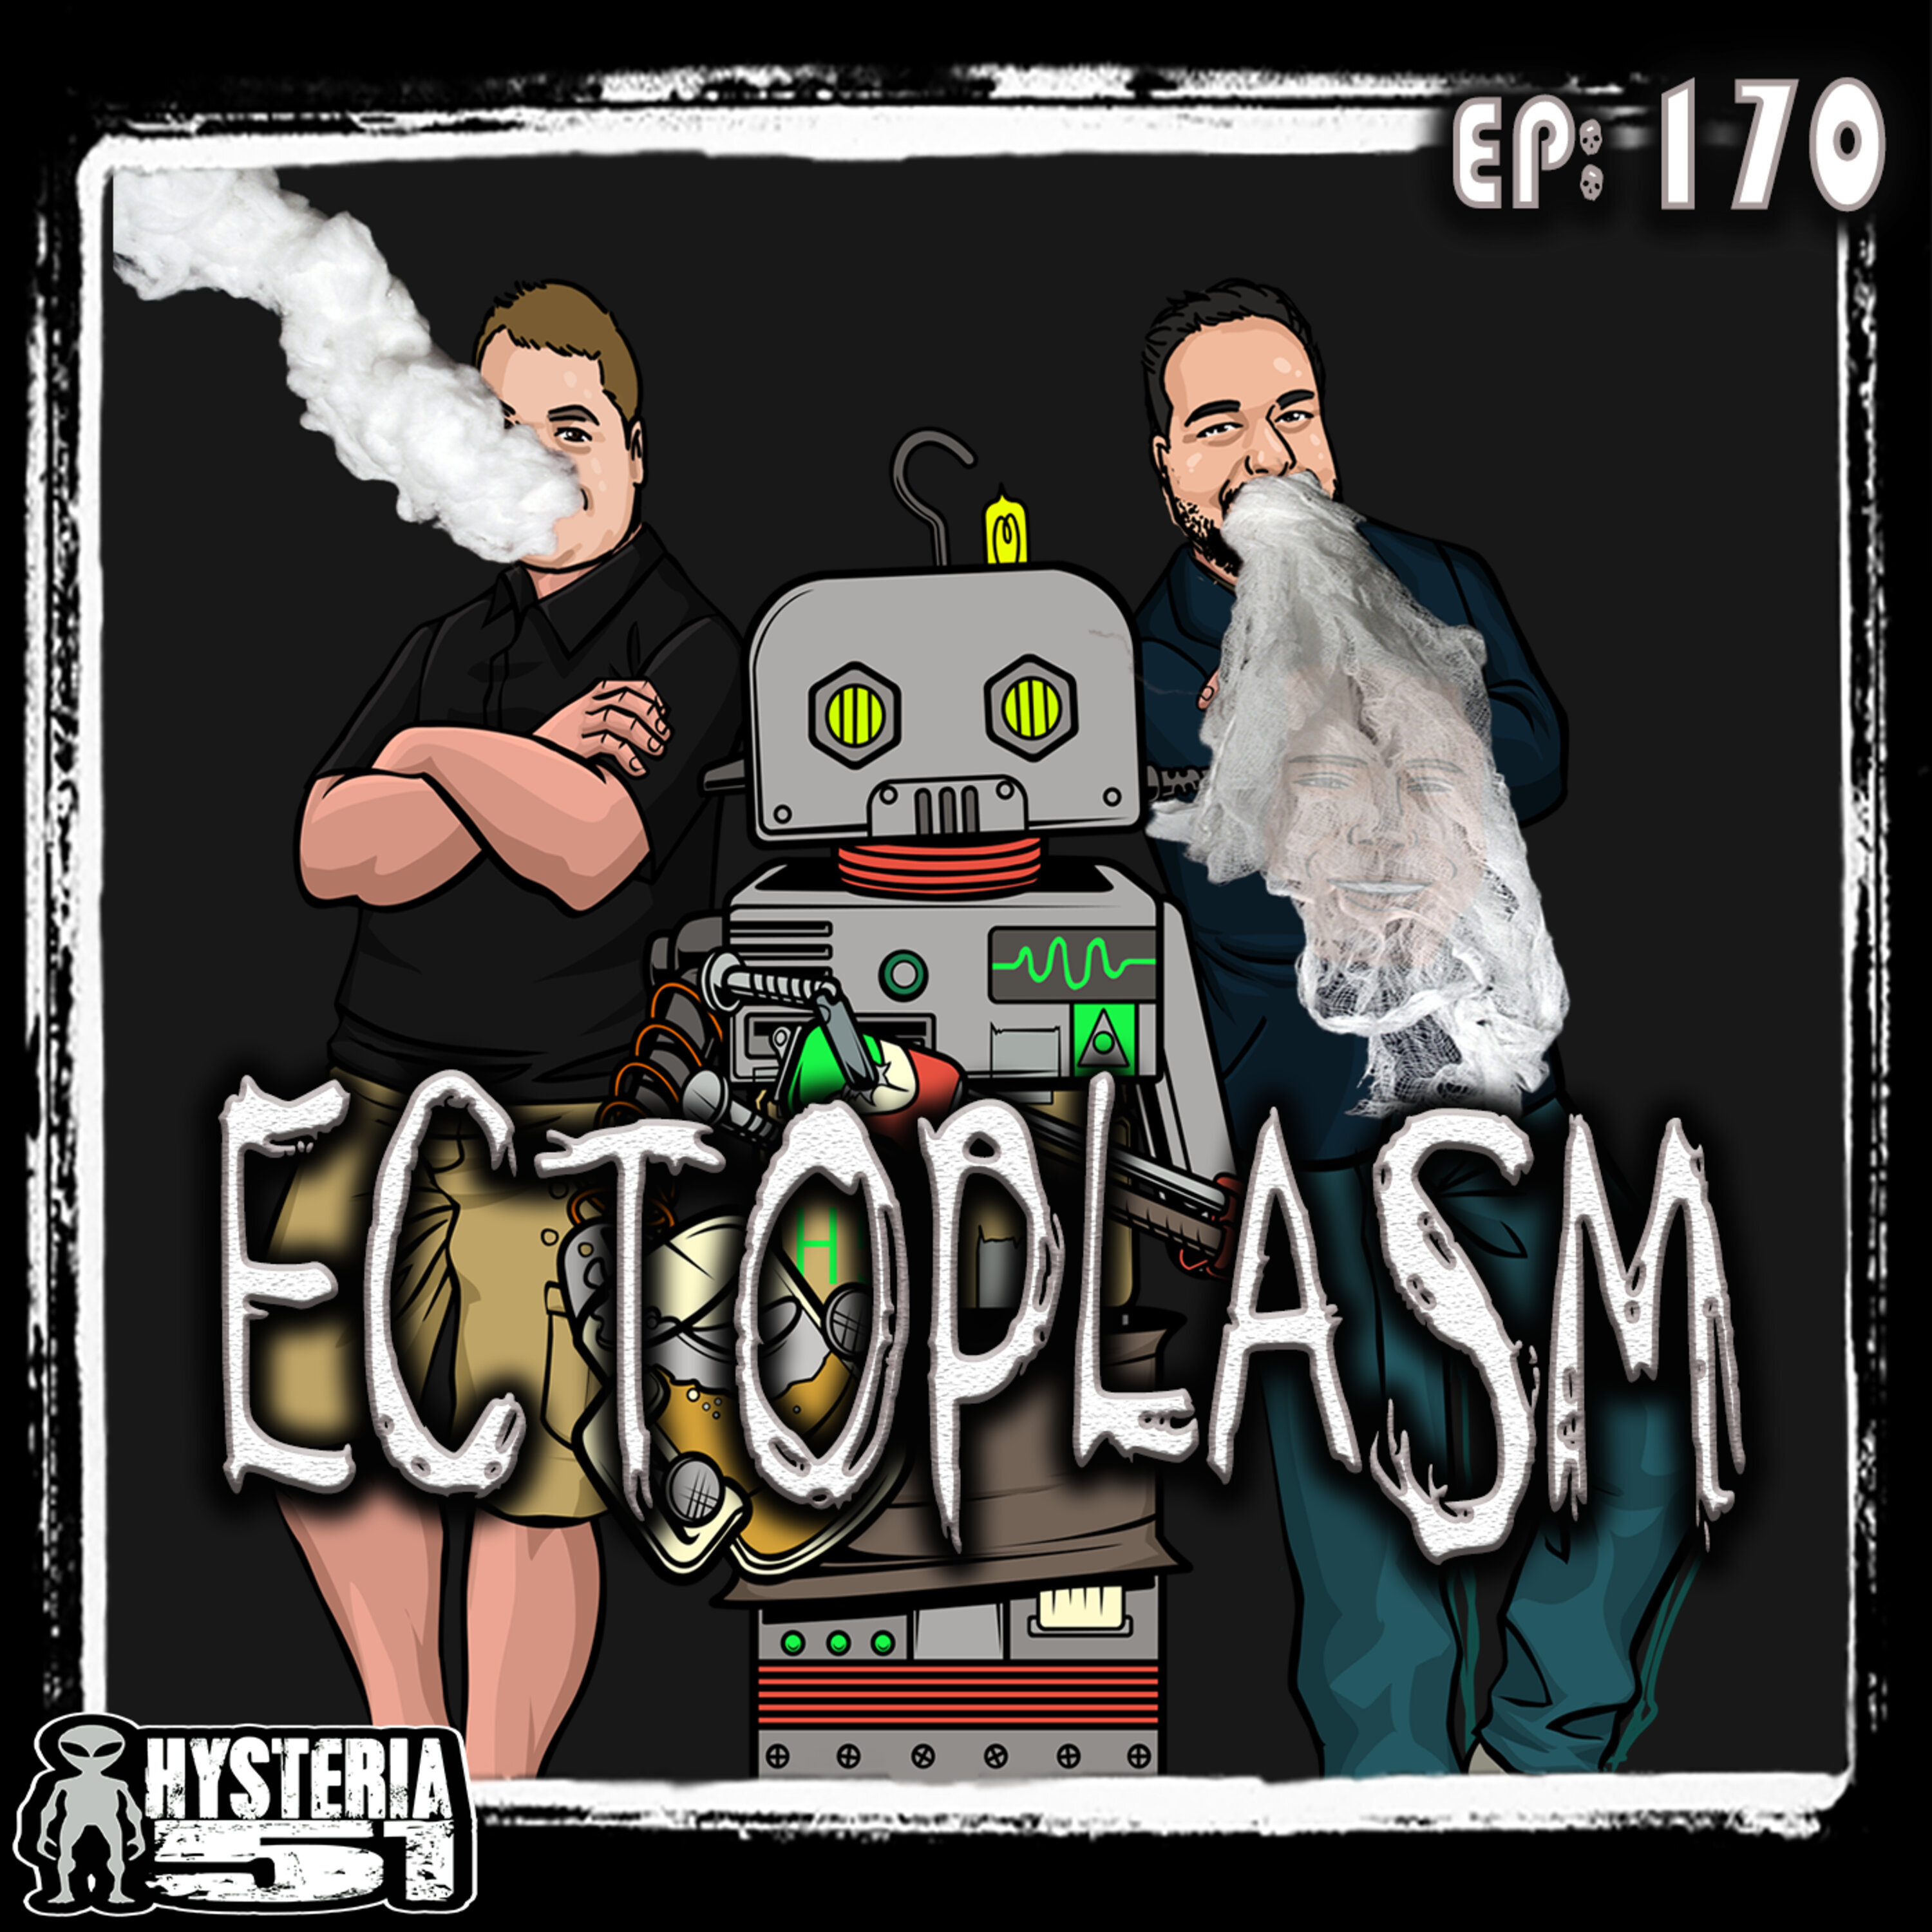 Ectoplasm: Real Ghost Goo or Make-Believe Muck? | 170